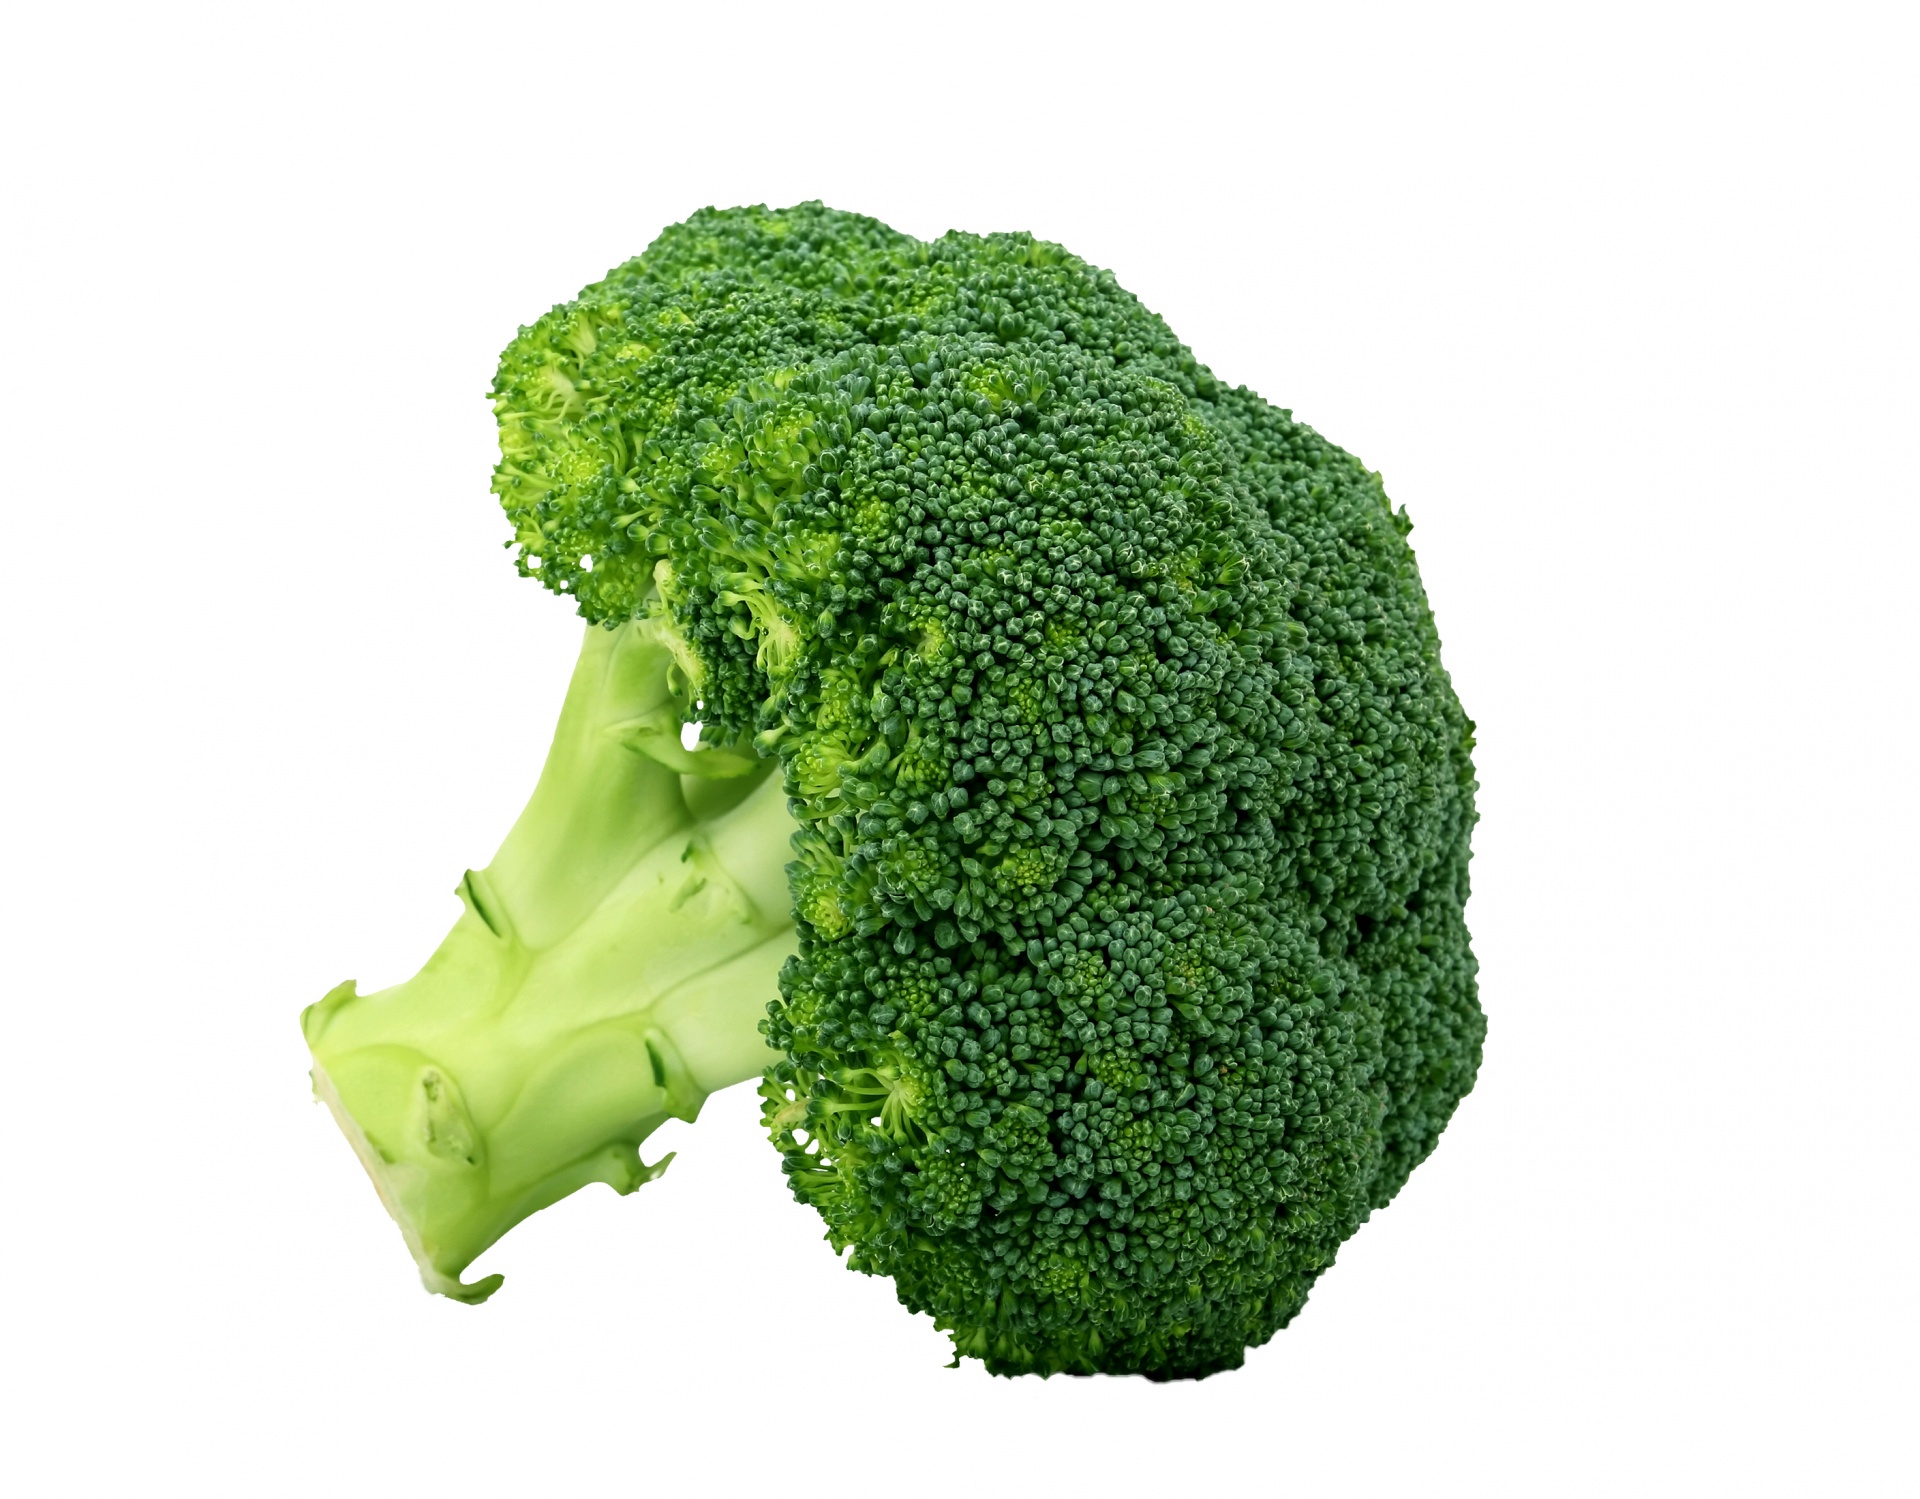 Broccoli,vegetable,green,food,healthy - free image from needpix.com